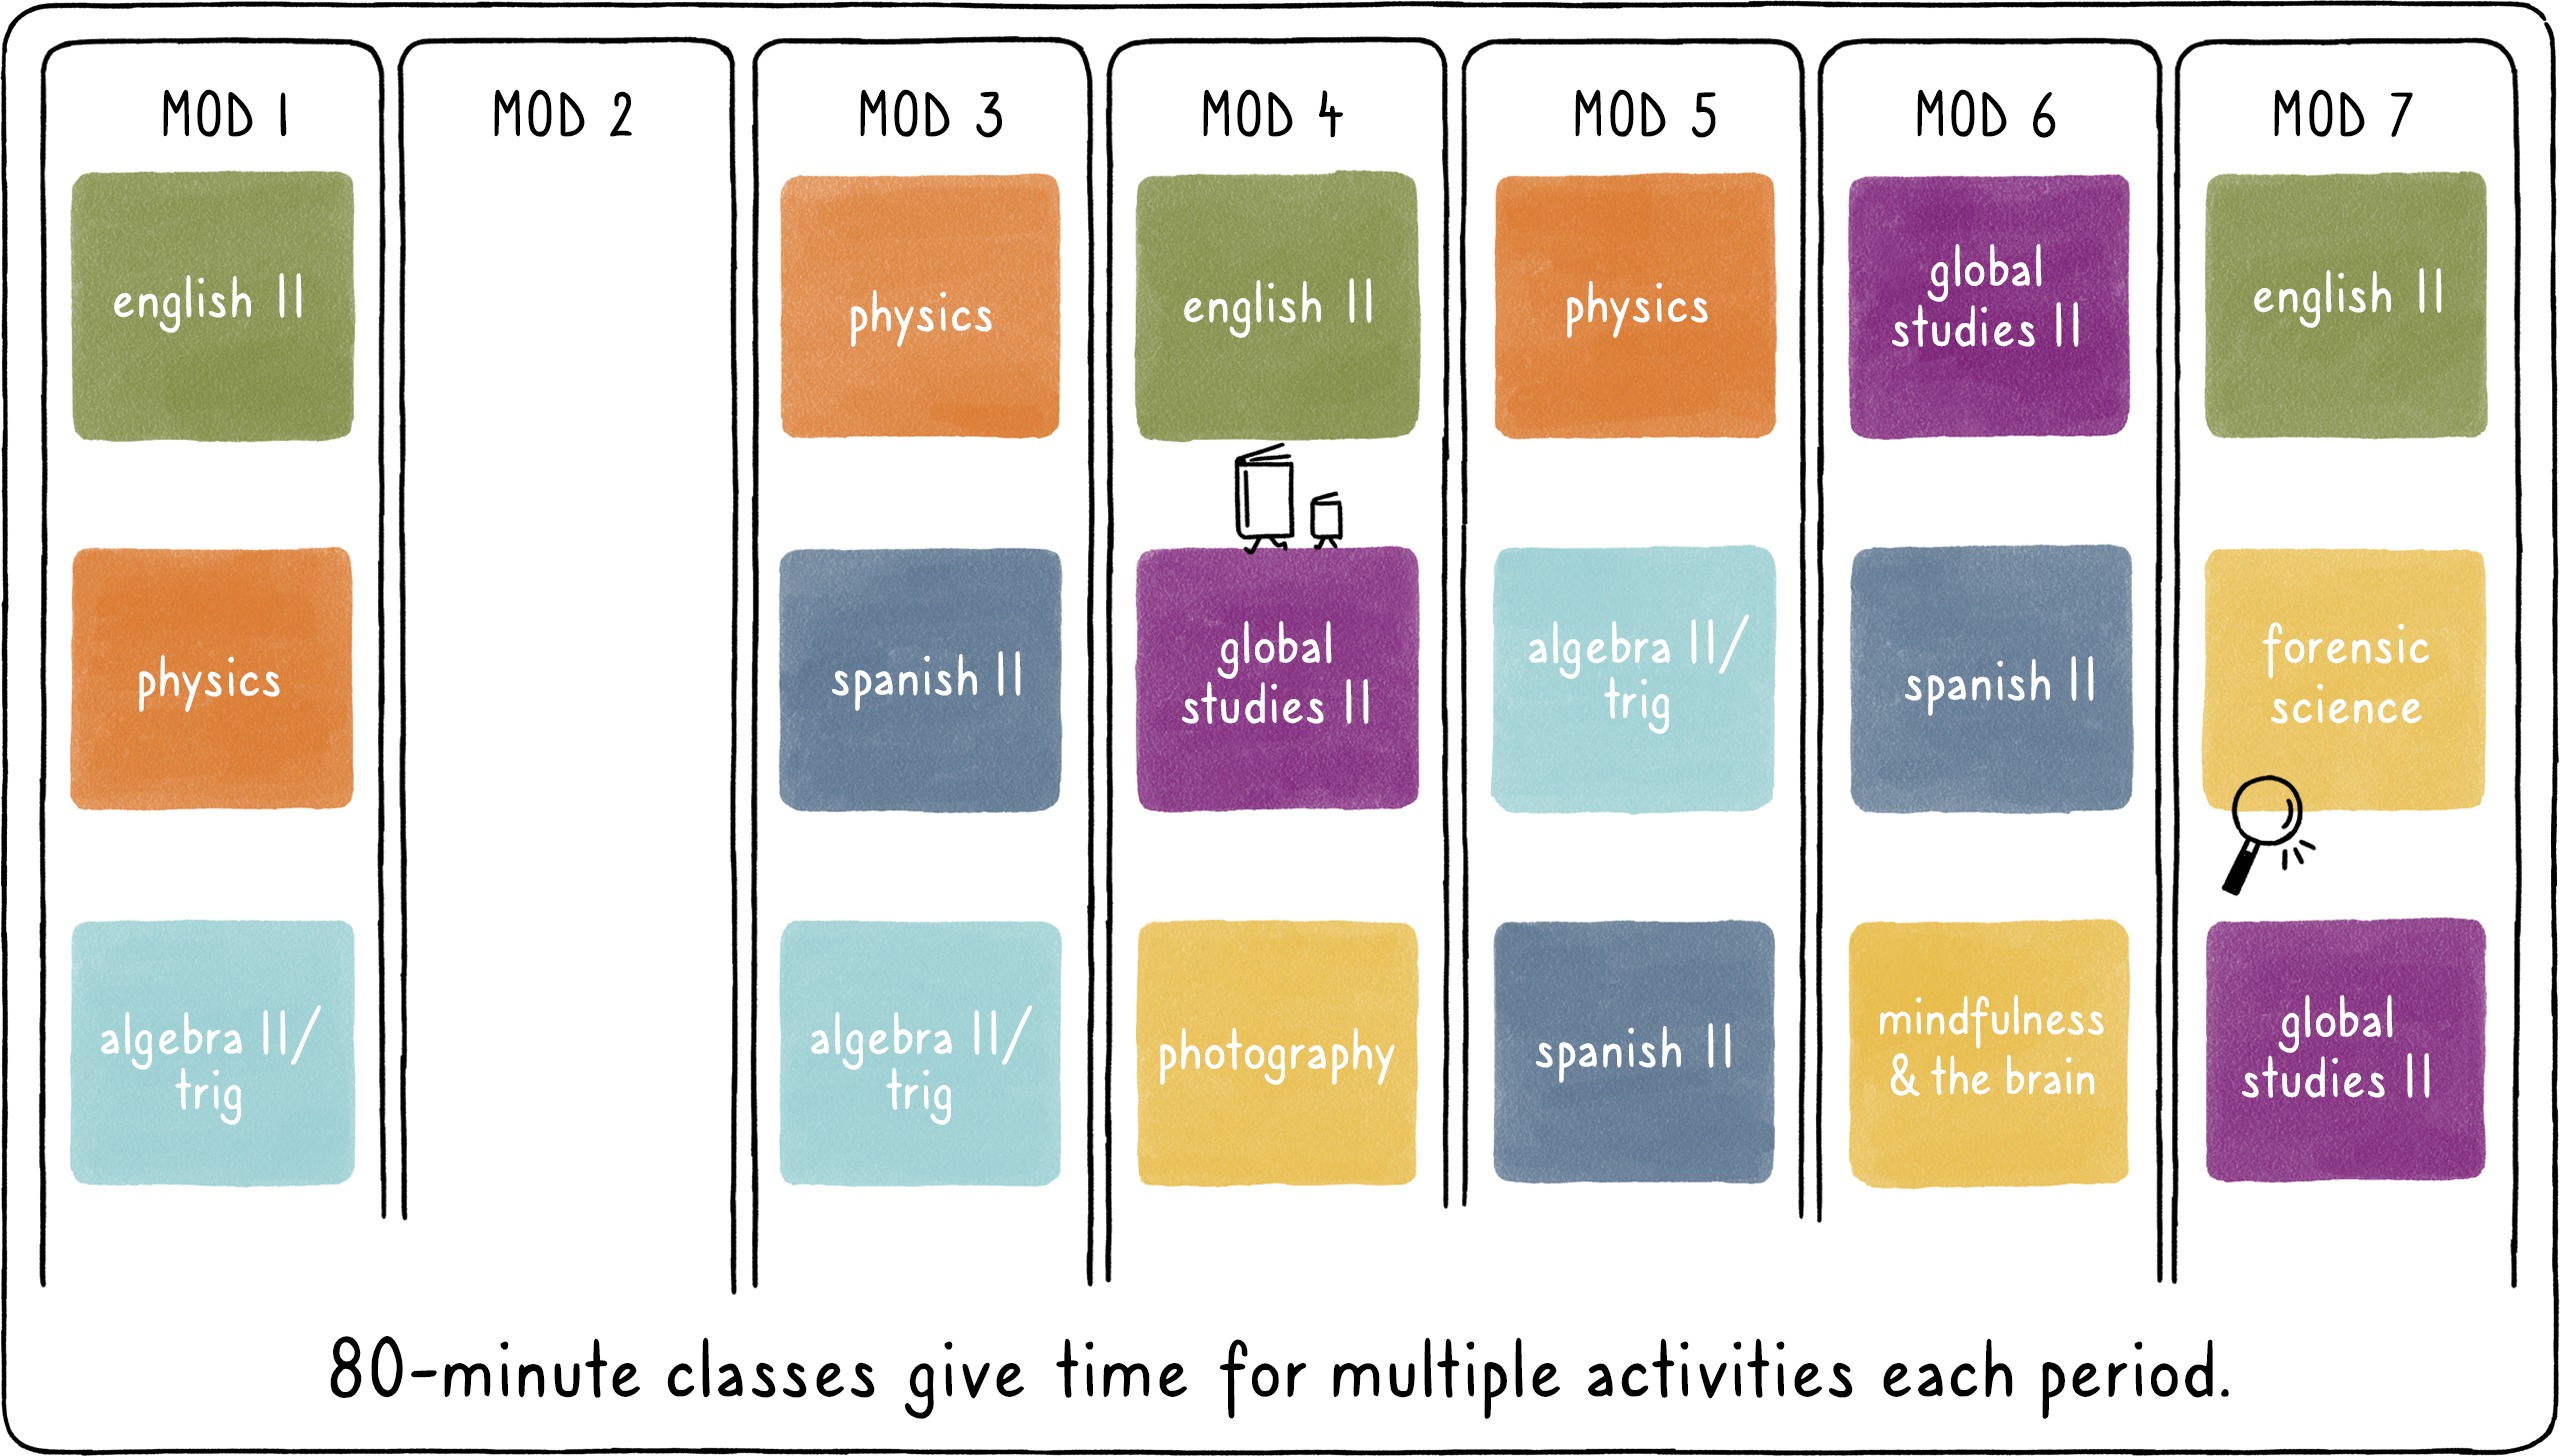 Illustration of a sample Mod Schedule